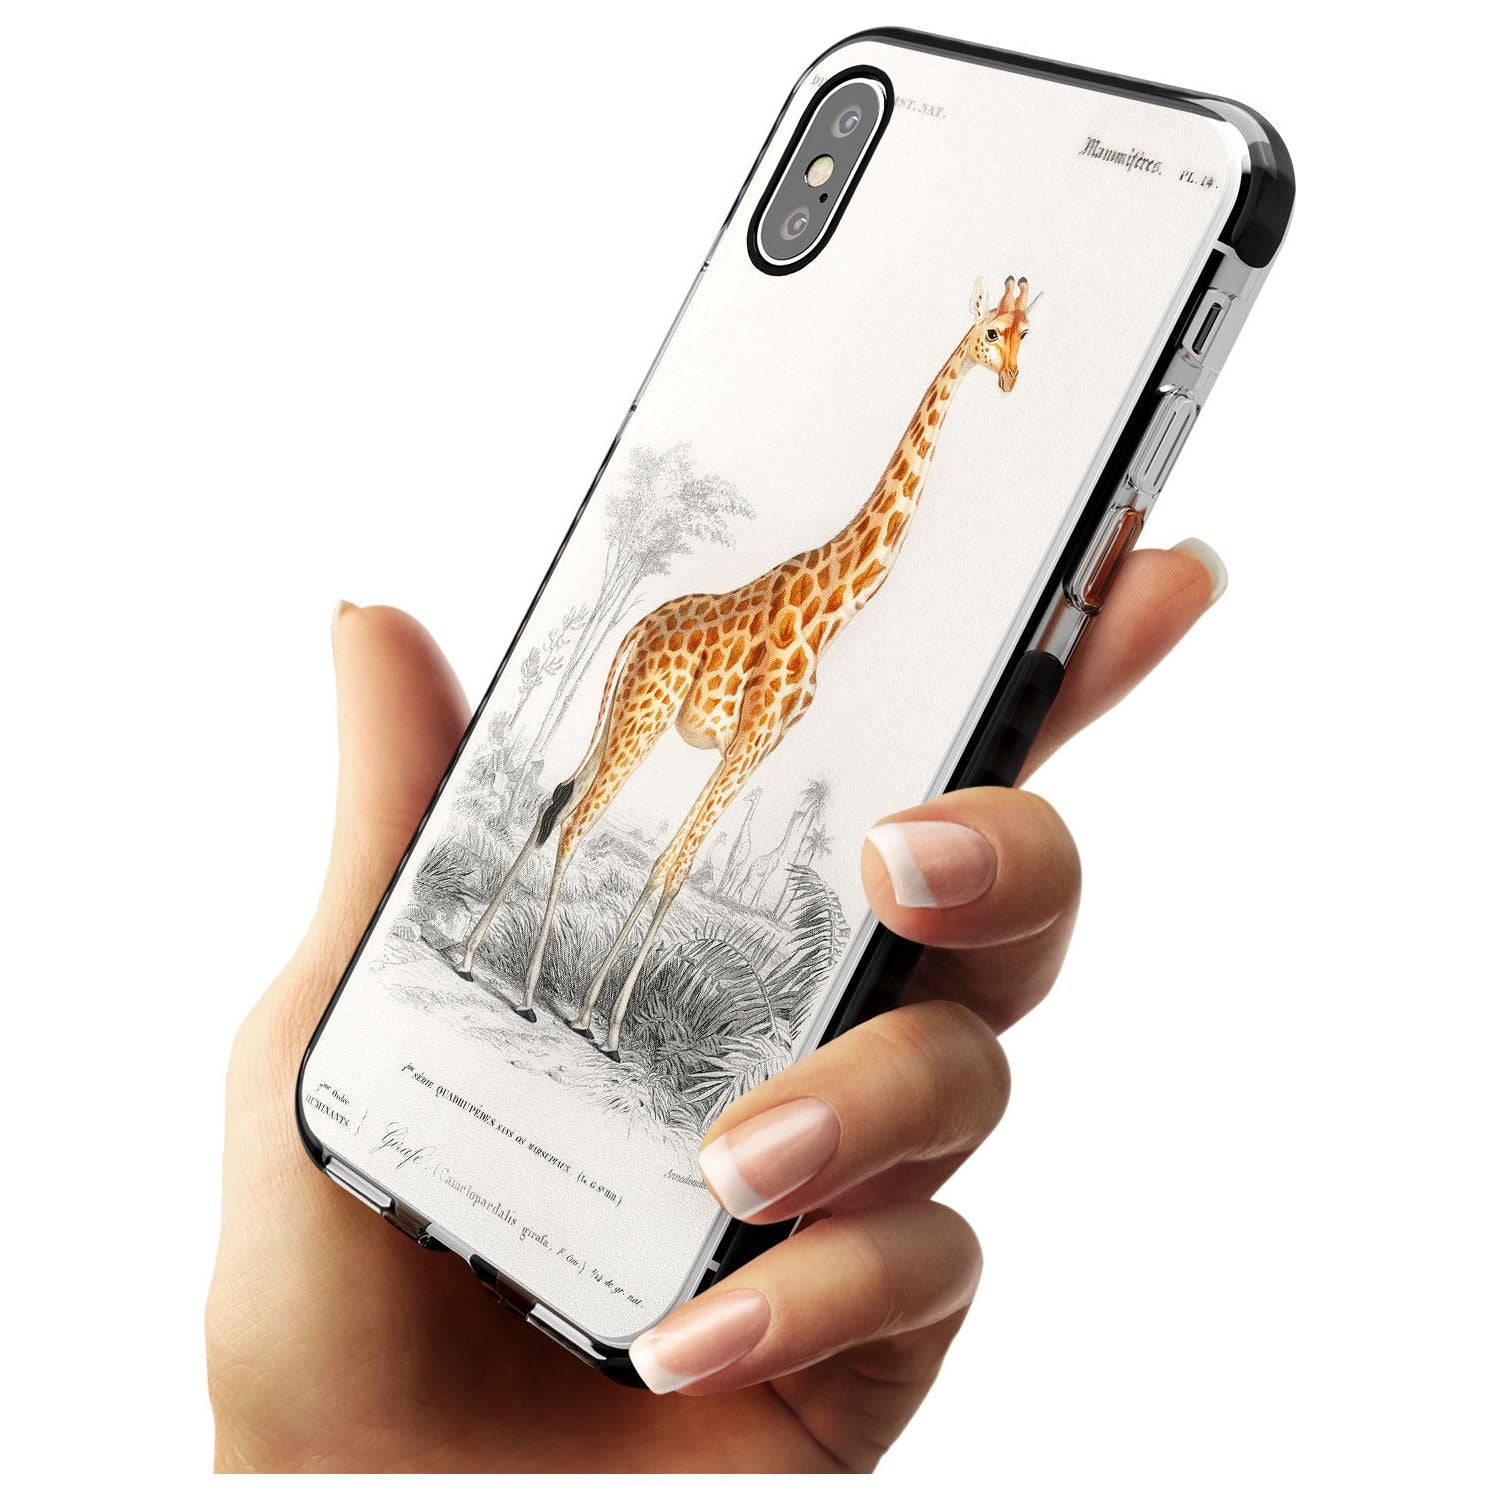 Vintage Girafe Art Black Impact Phone Case for iPhone X XS Max XR